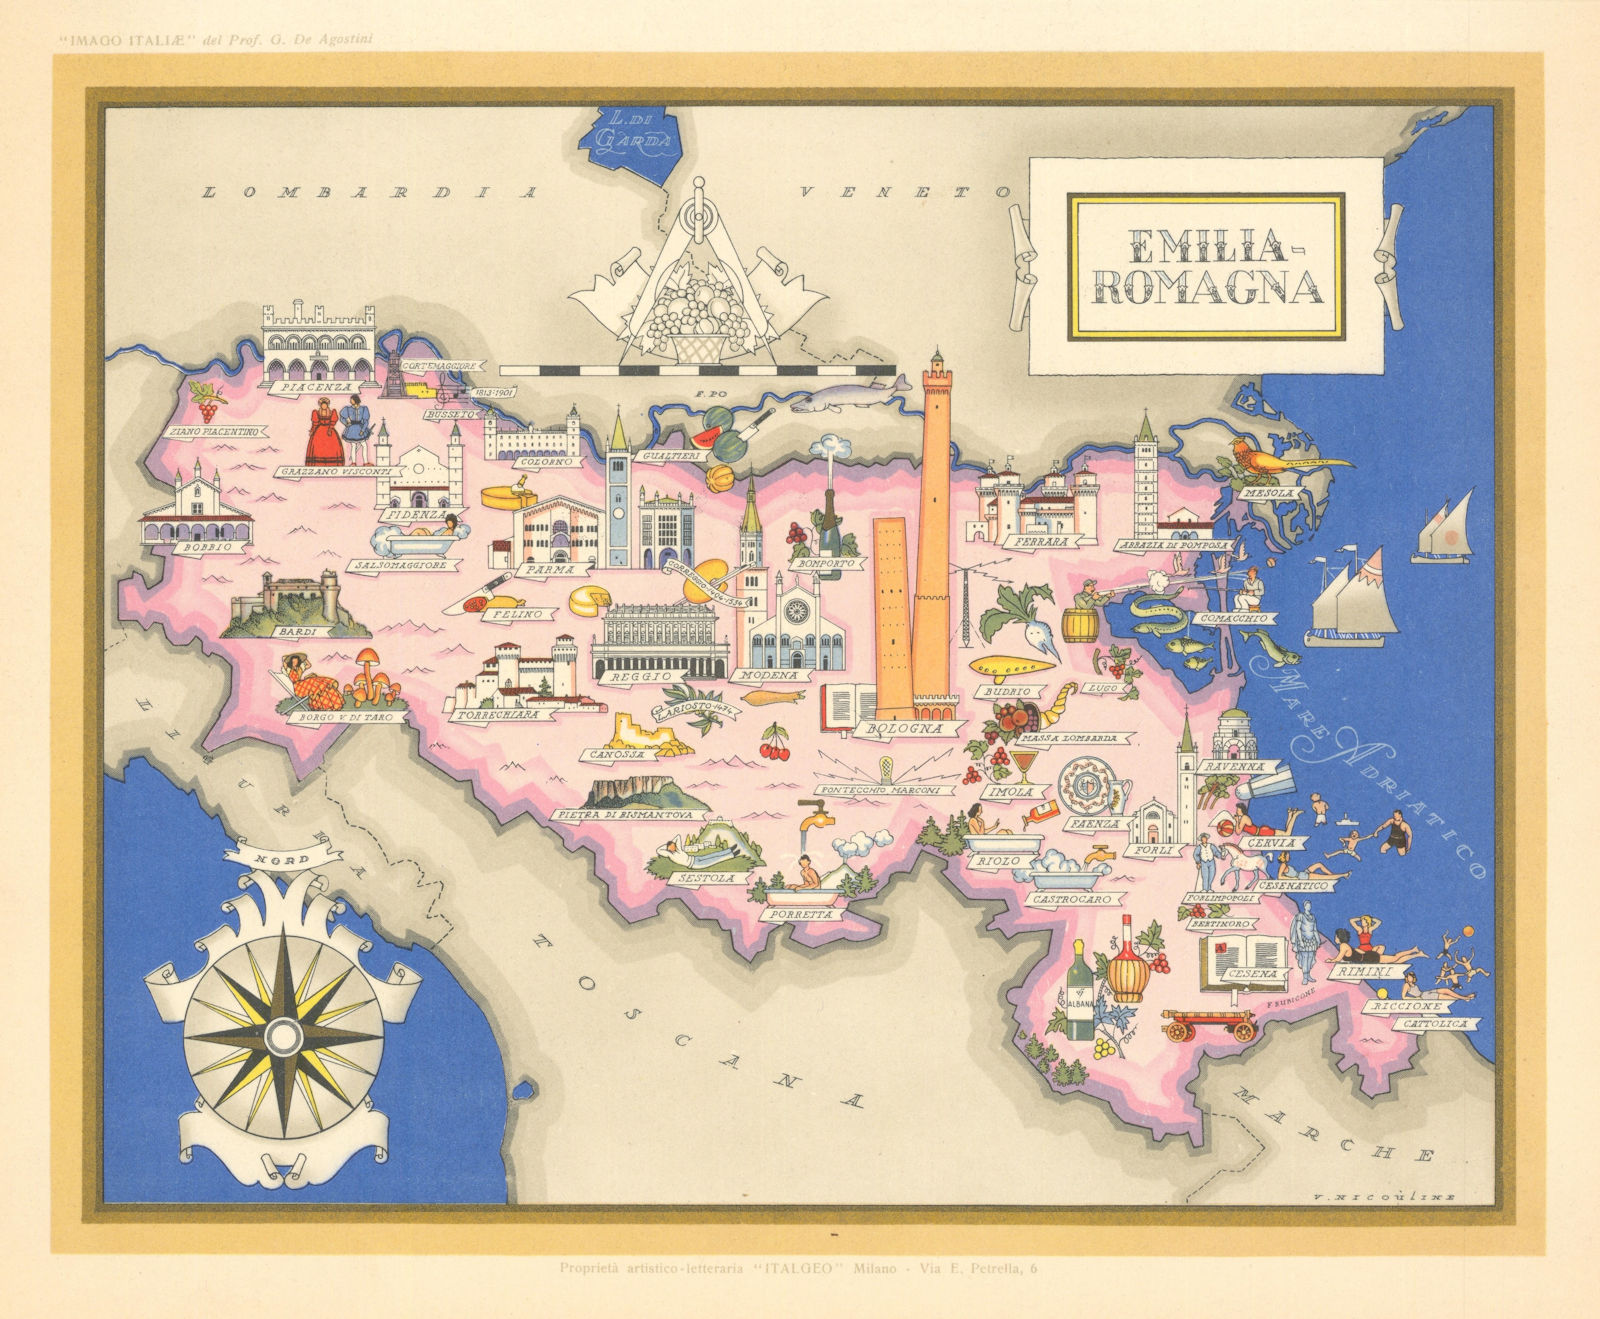 Emilia-Romagna pictorial map by Vsevolode Nicouline. Italgeo/Agostini c1950